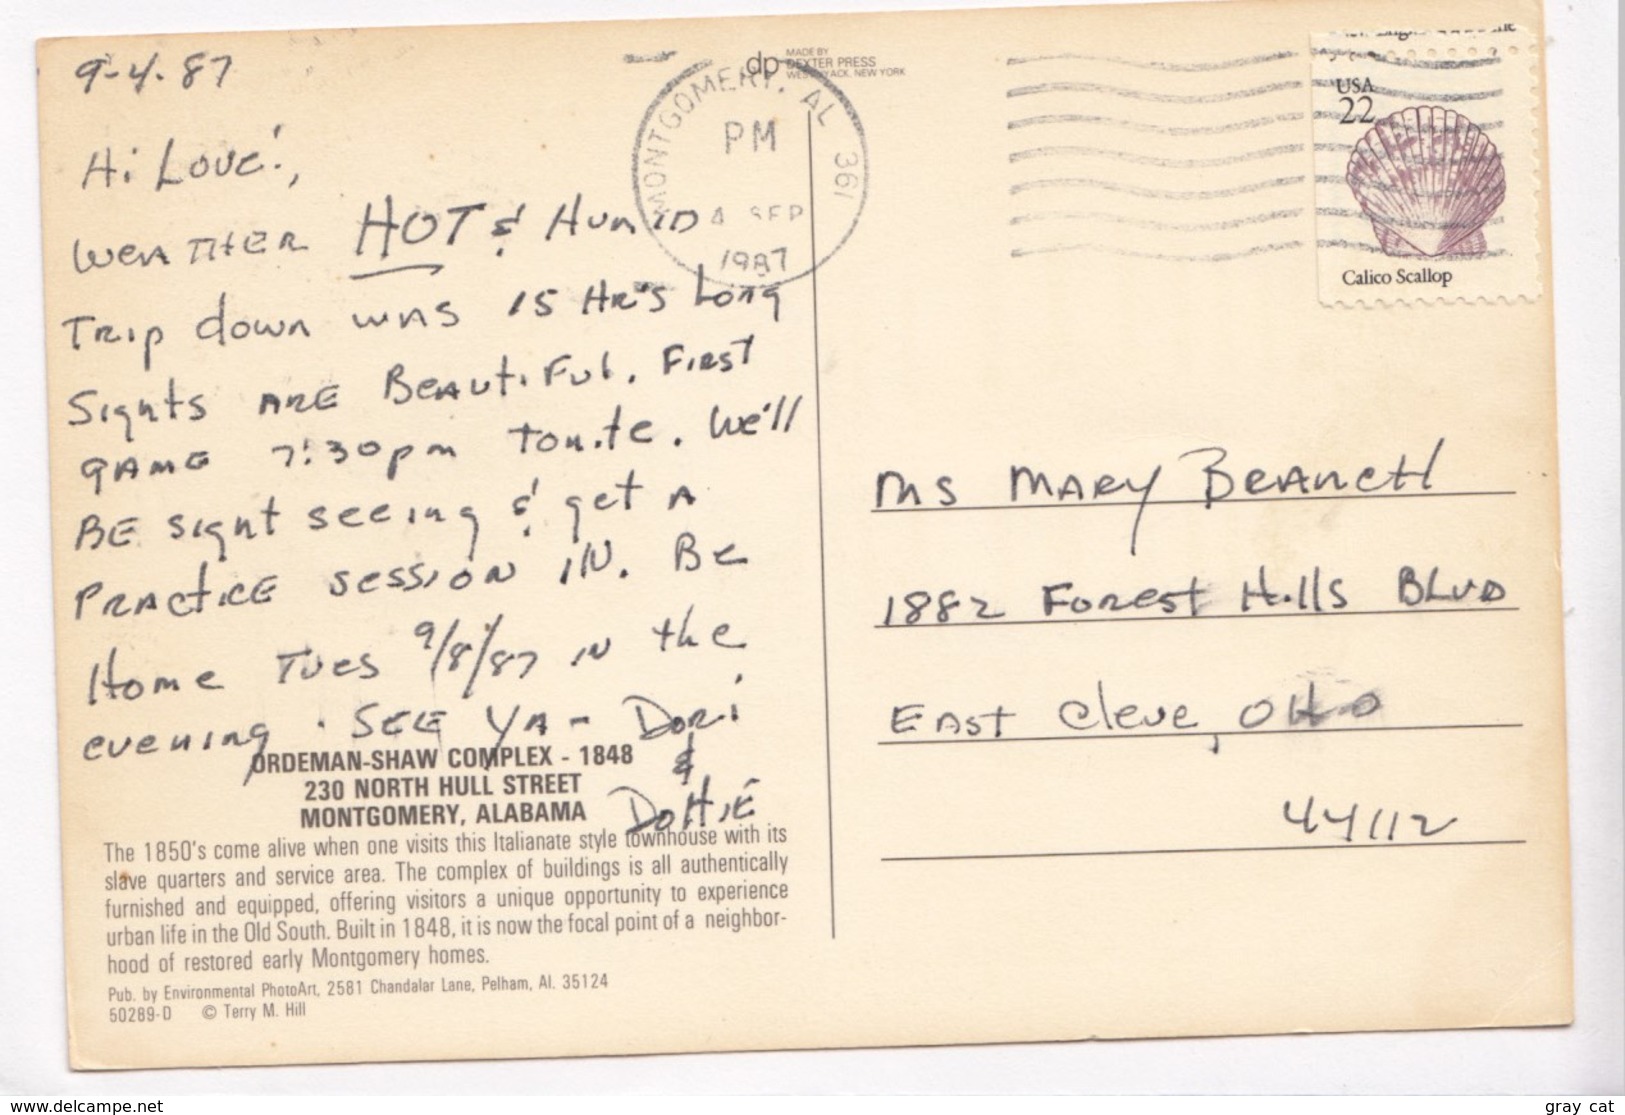 Ordeman-Shaw Complex, Montgomery, Alabama, 1987 Used Postcard [22585] - Montgomery